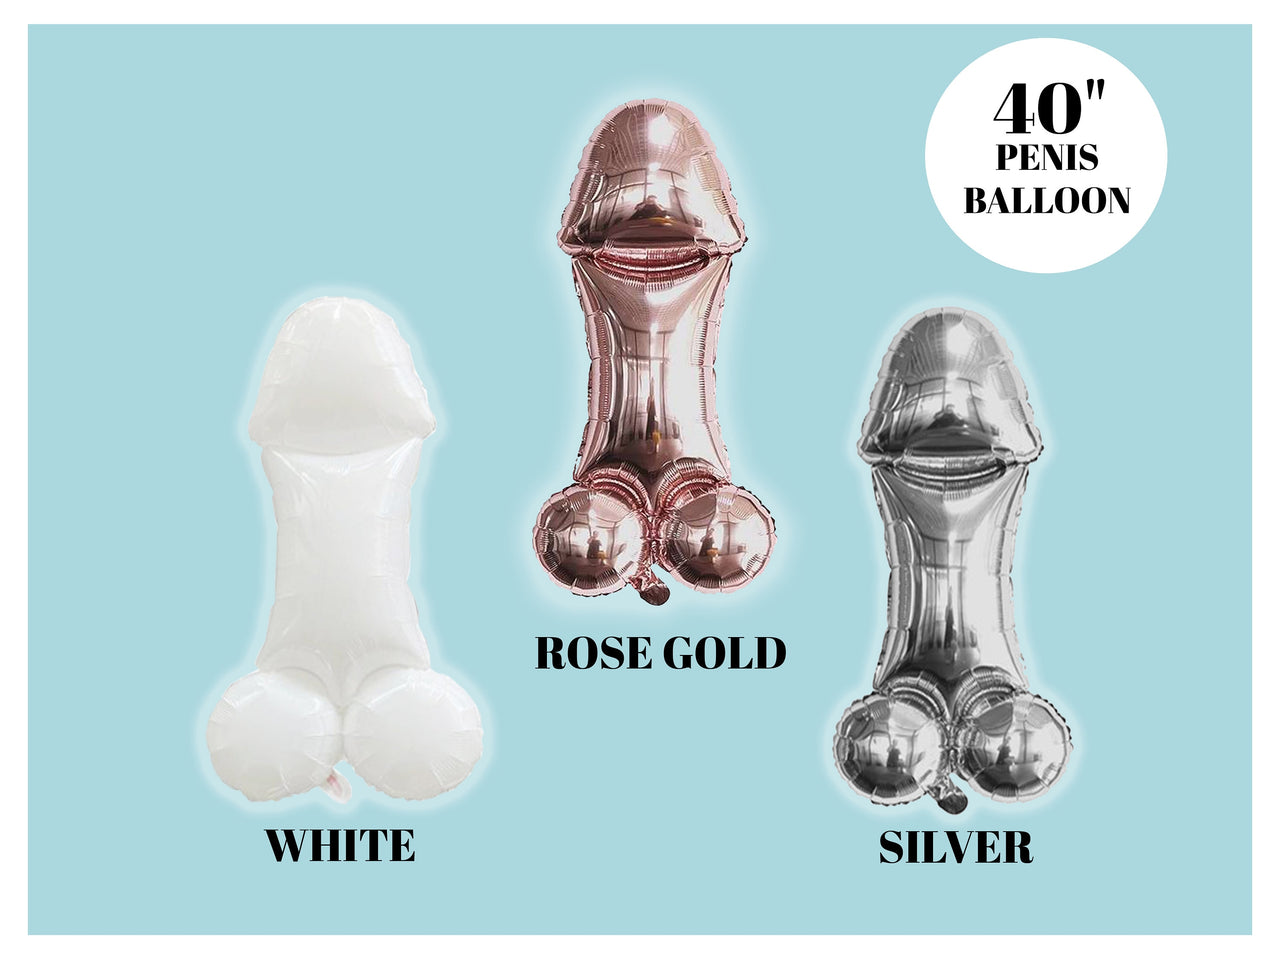 40" Foil Penis Balloon in Rose Gold